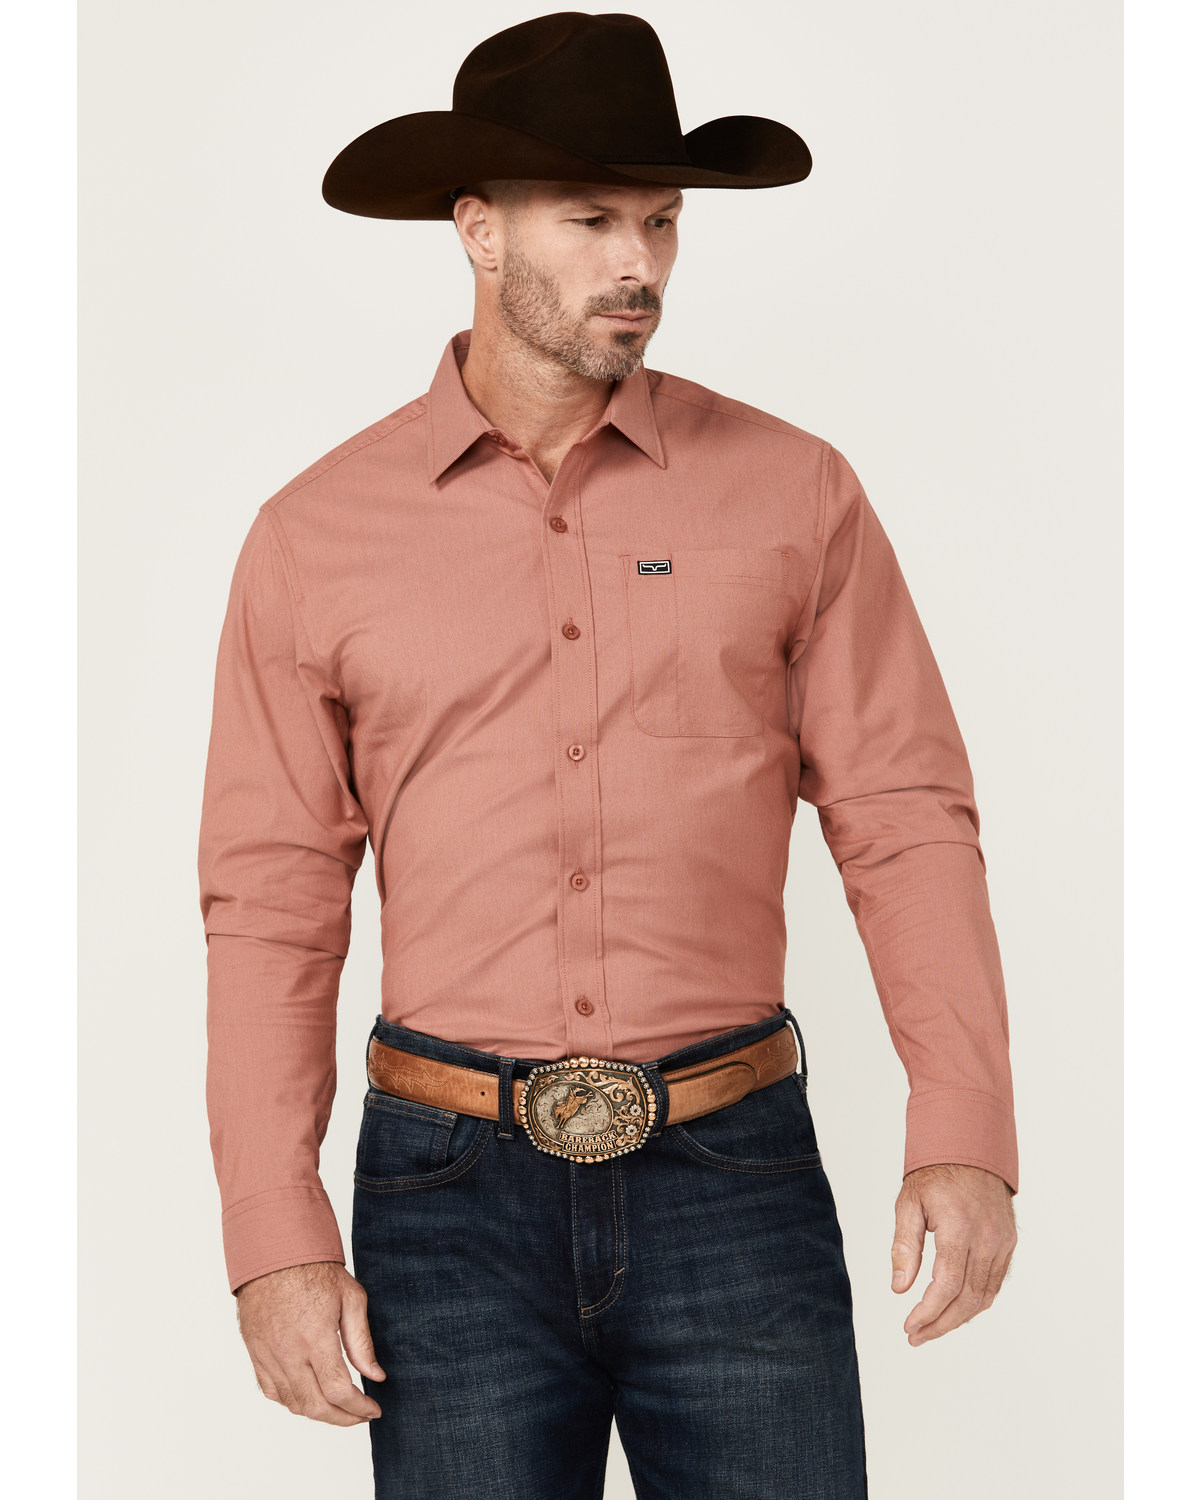 Kimes Ranch Men's Linville Short Sleeve Button-Down Performance Shirt